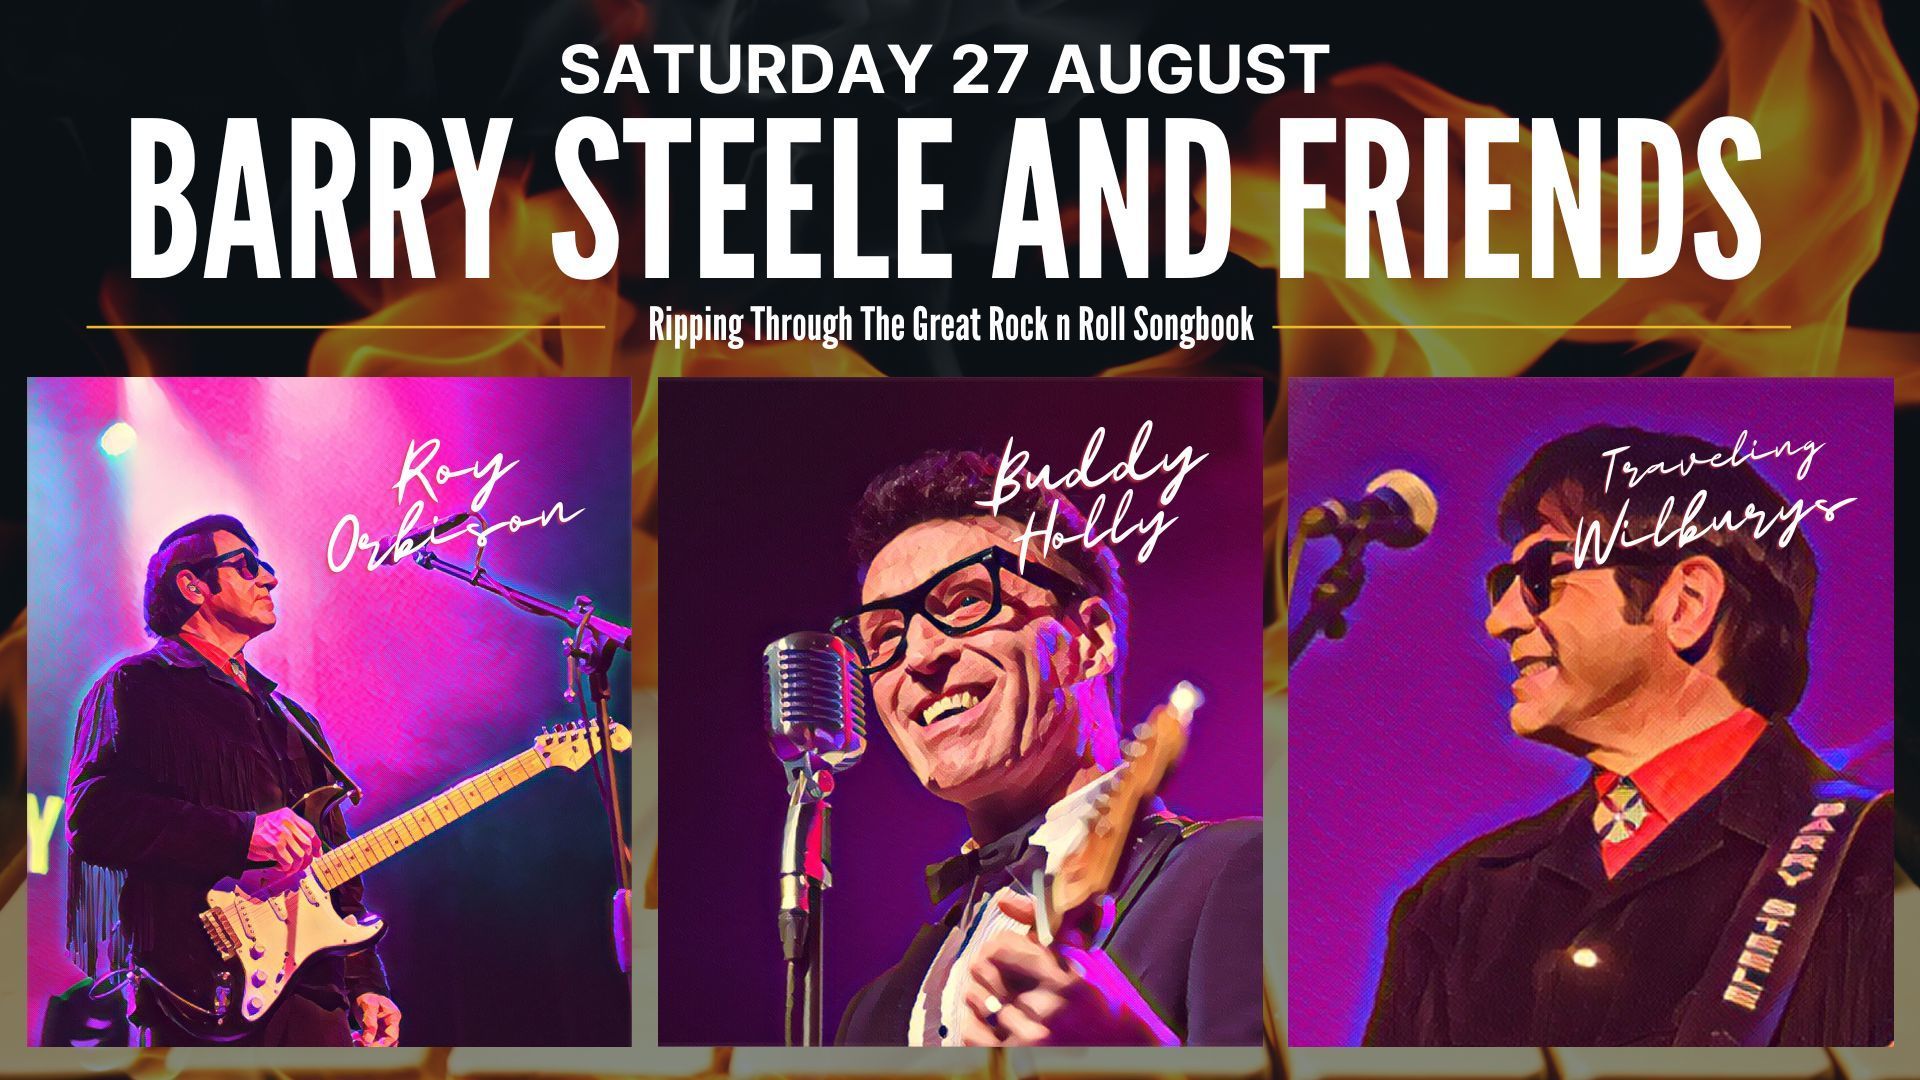 Barry Steele and Friends - The Roy Orbison Story, Llandudno, Wales, United Kingdom